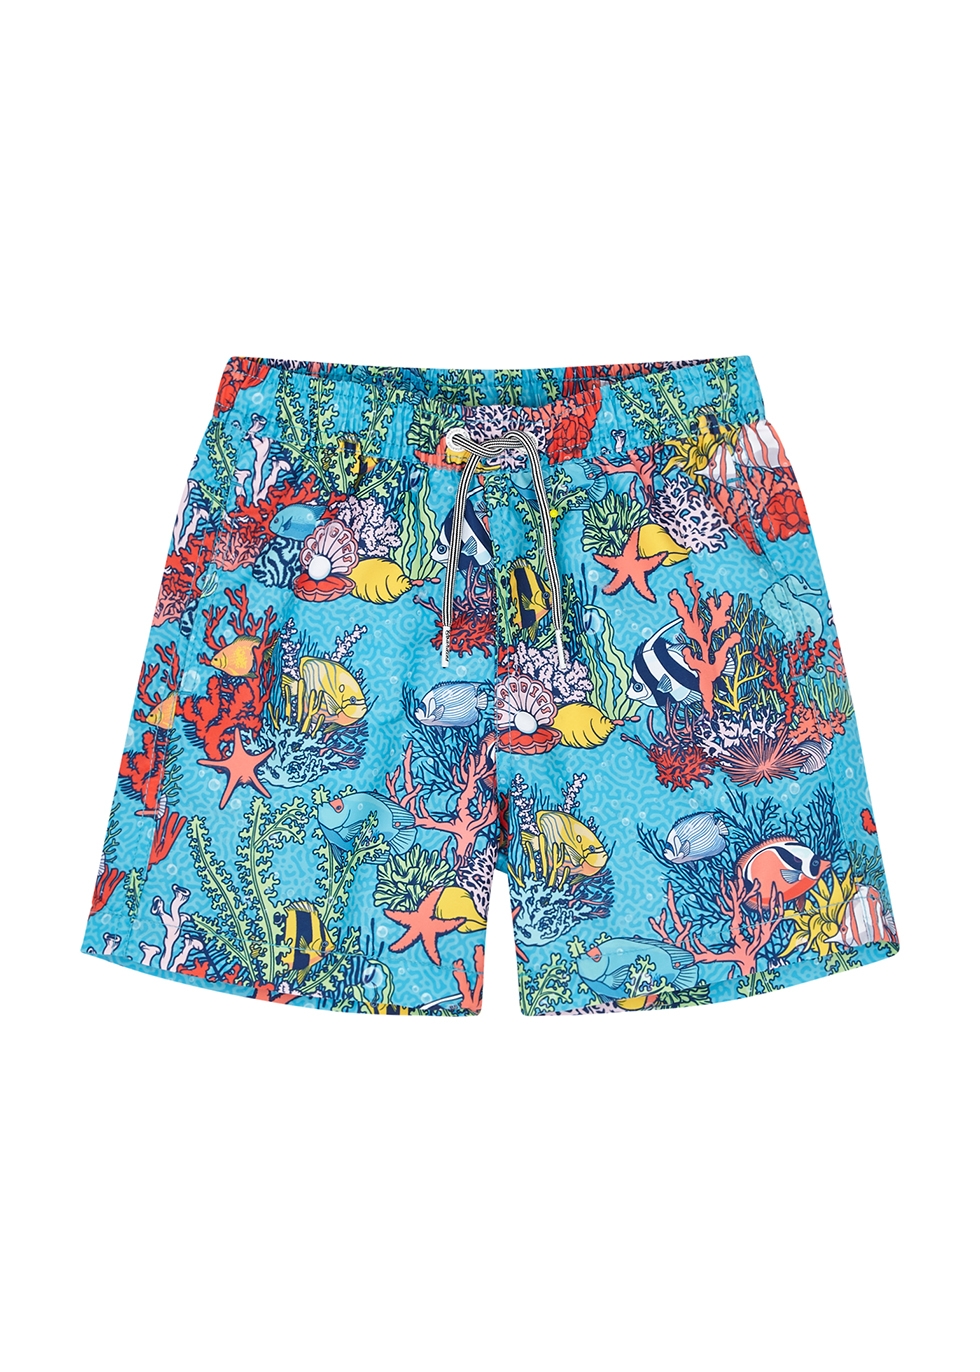 Harvey Nichols Sport & Swimwear Swimwear Swim Shorts KIDS Coral Reef printed shell swim shorts 